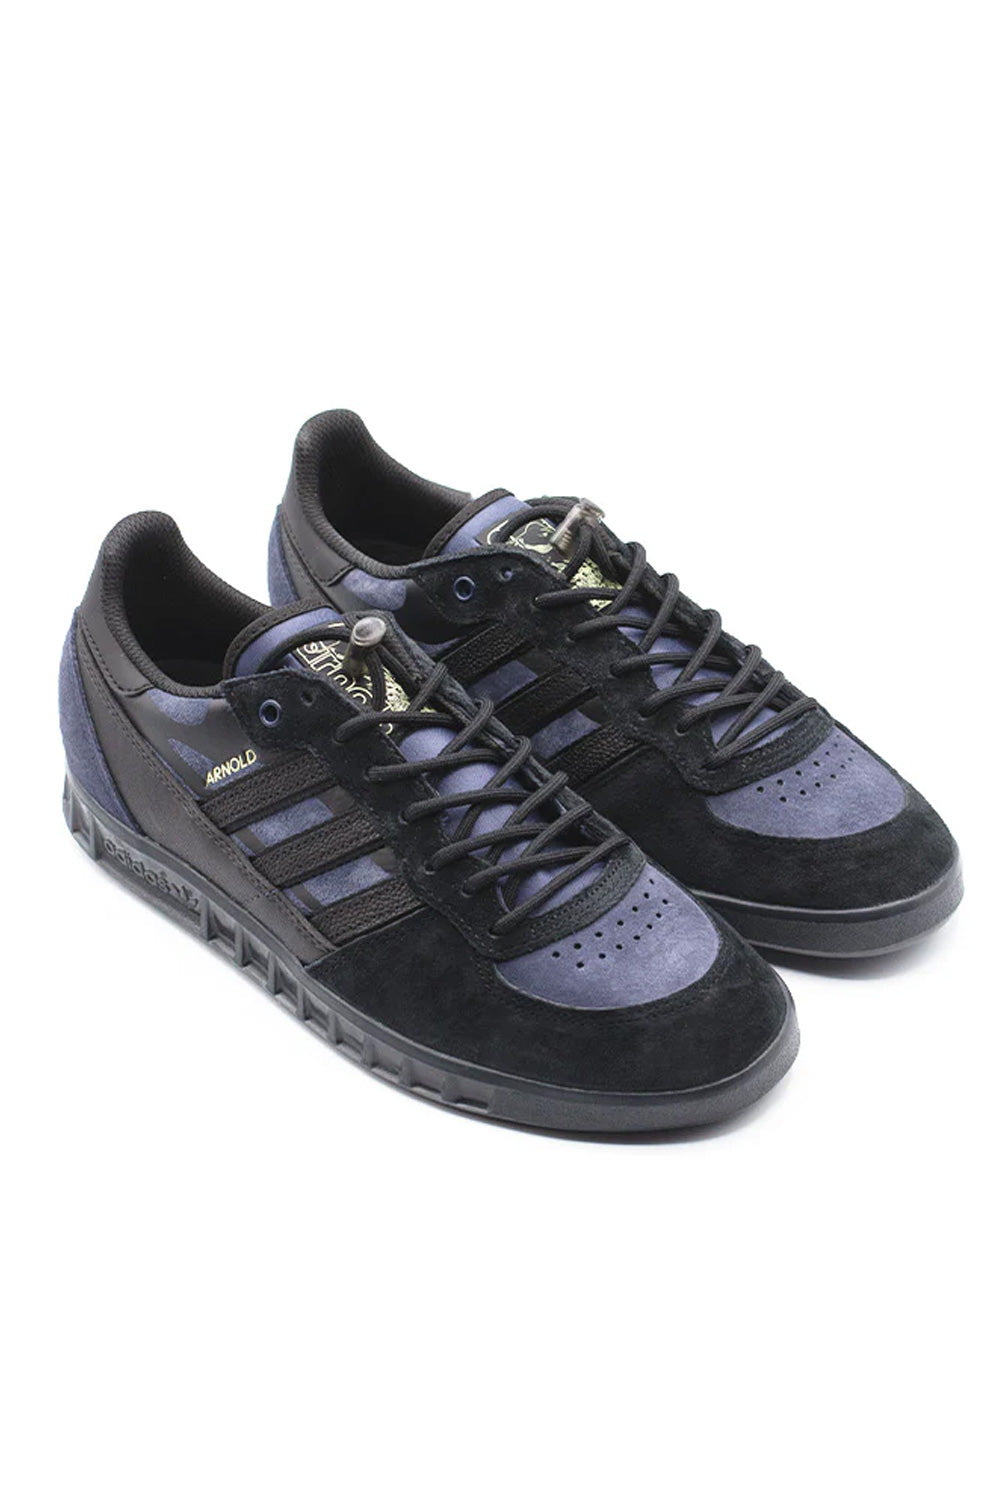 Adidas Handball Top Shoe (Mike Arnold) Core Black / Dark Blue / Flash Orange - BONKERS